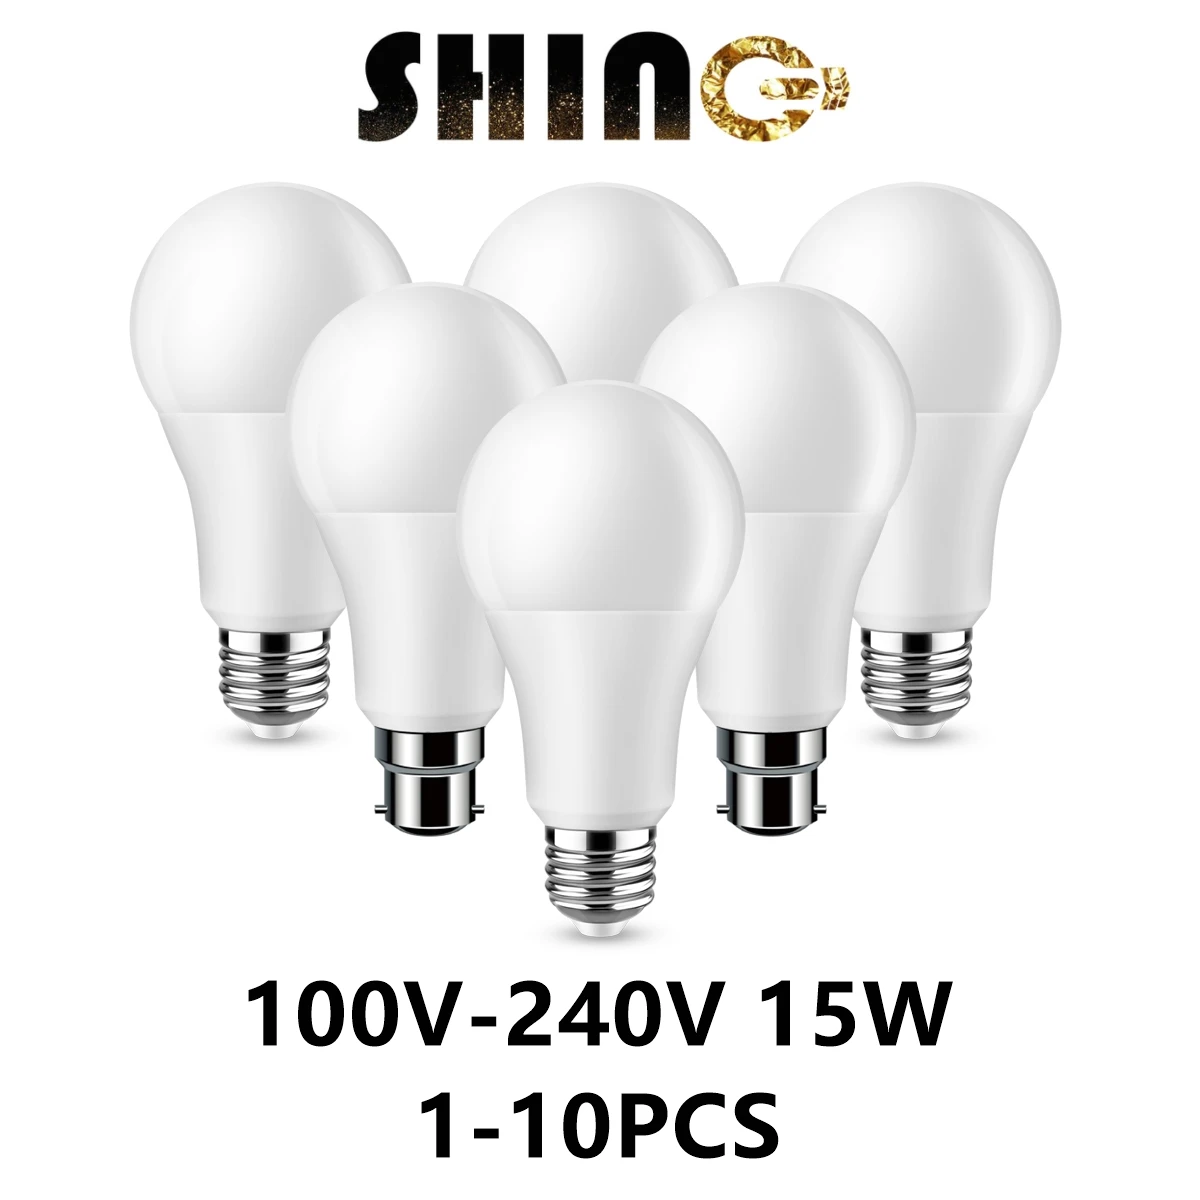 

LED high power bulb A60 120V 220V E27 B22 15W 100LM/W 3000K/4000K/6000K super bright warm white light for mall home lighting